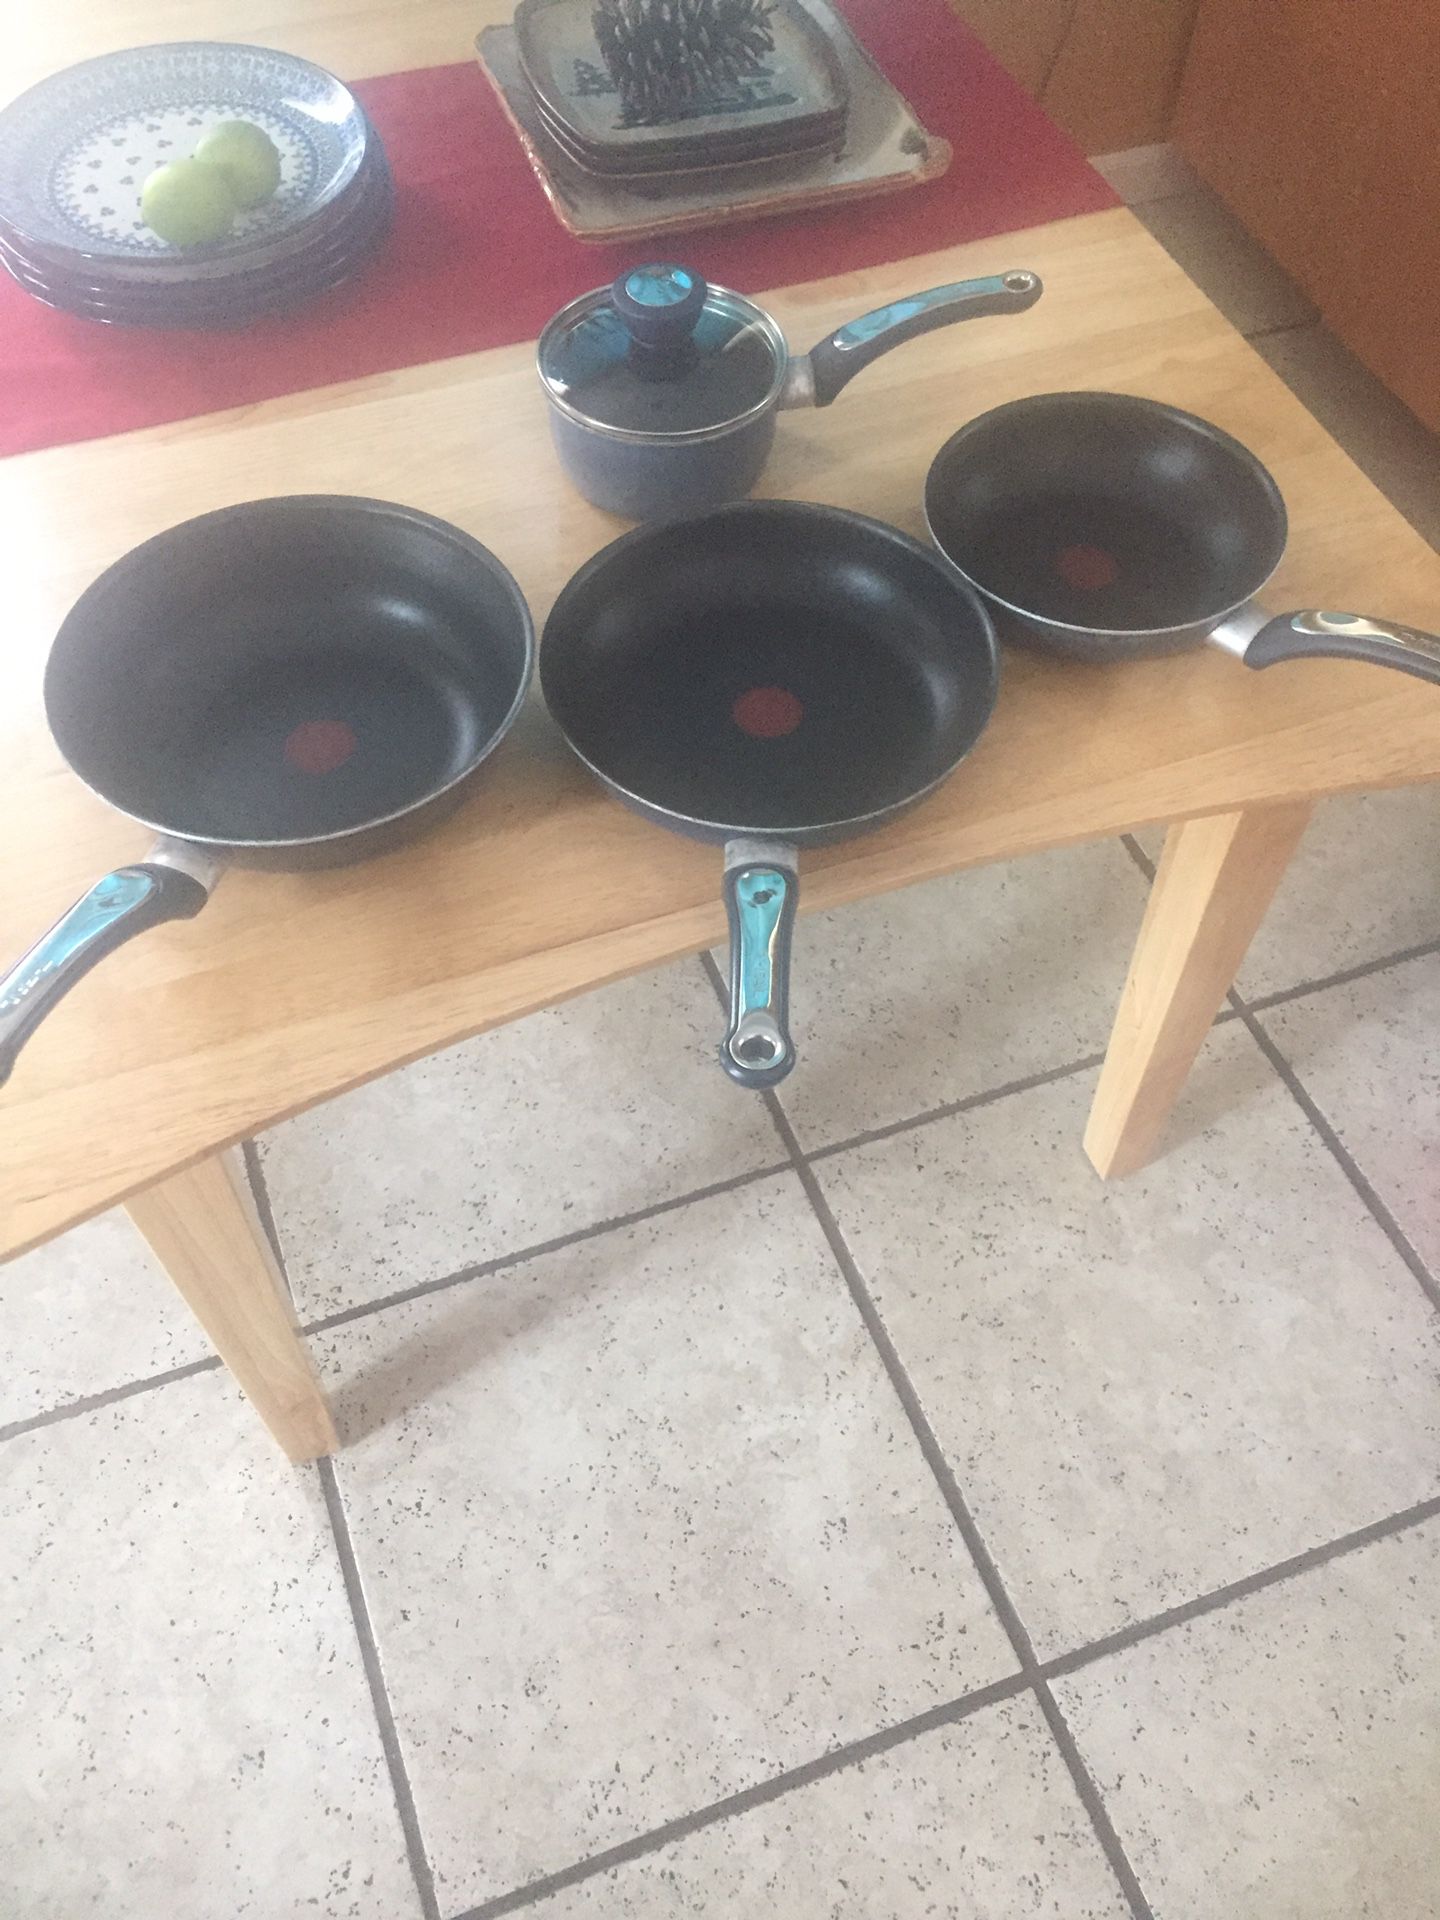 T-Fal non-stick cookware set